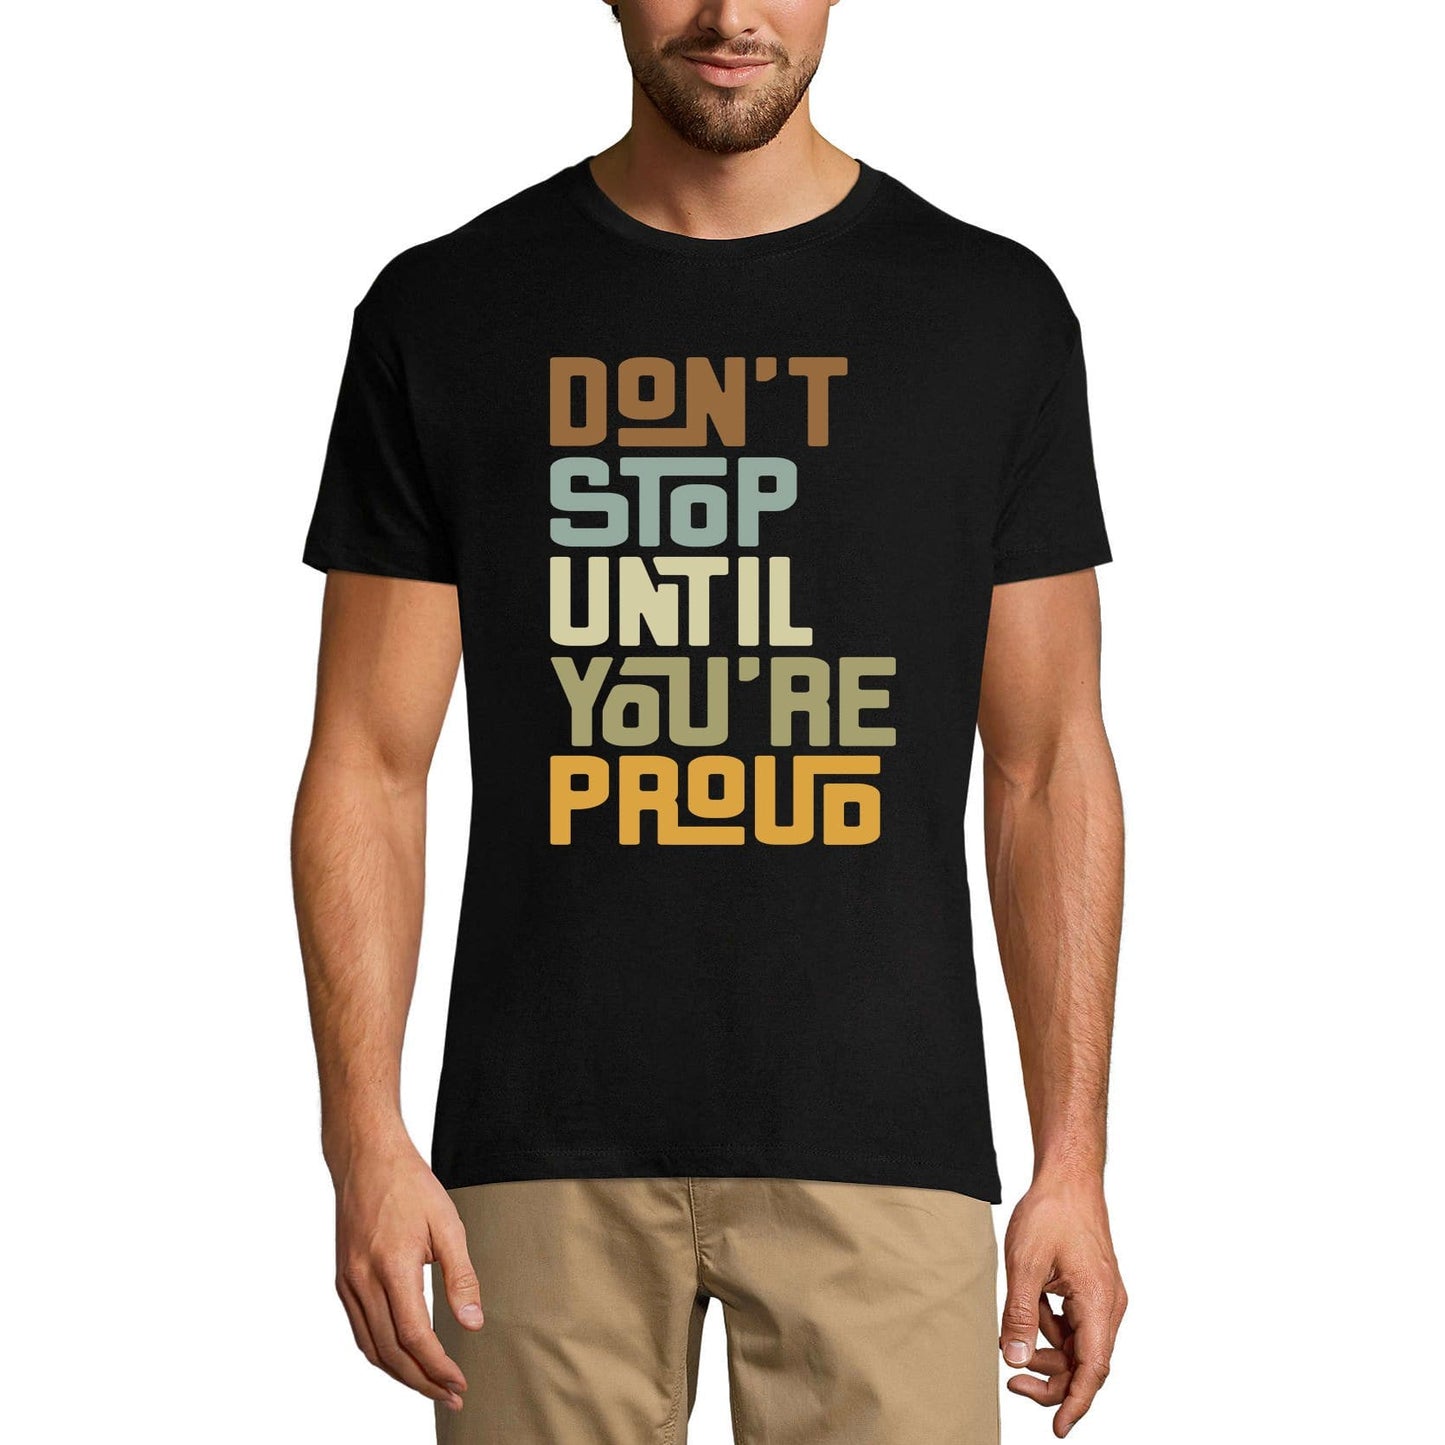 ULTRABASIC Men's T-Shirt Don't Stop Until You're Proud - Short Sleeve Tee shirt